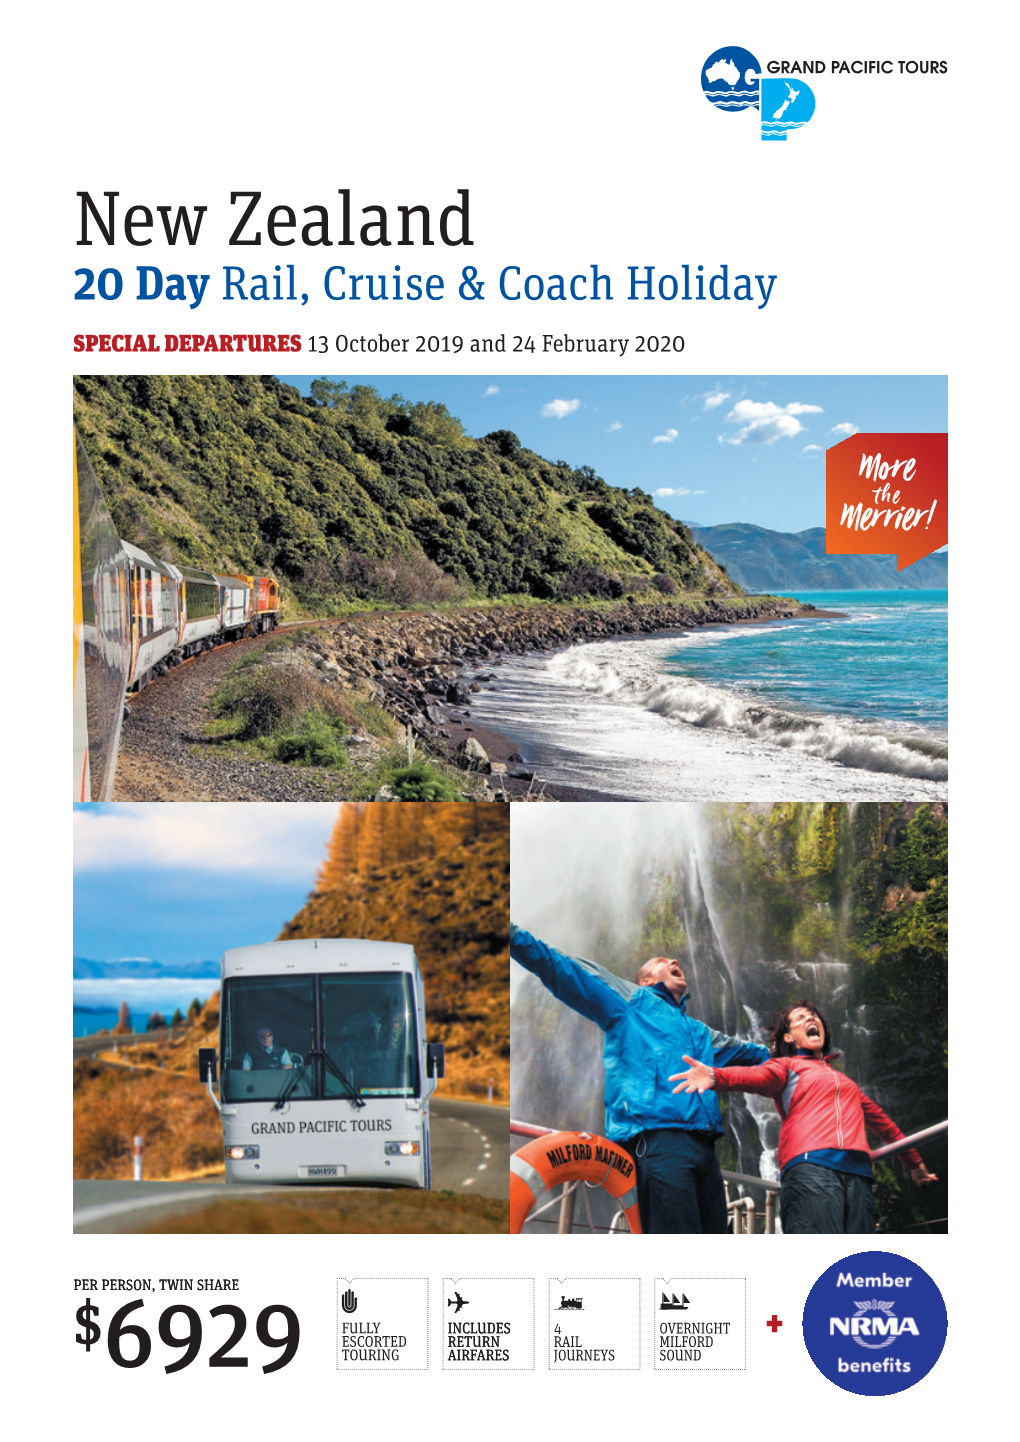 New Zealand Rail, Cruise & Coach Holiday Itinerary